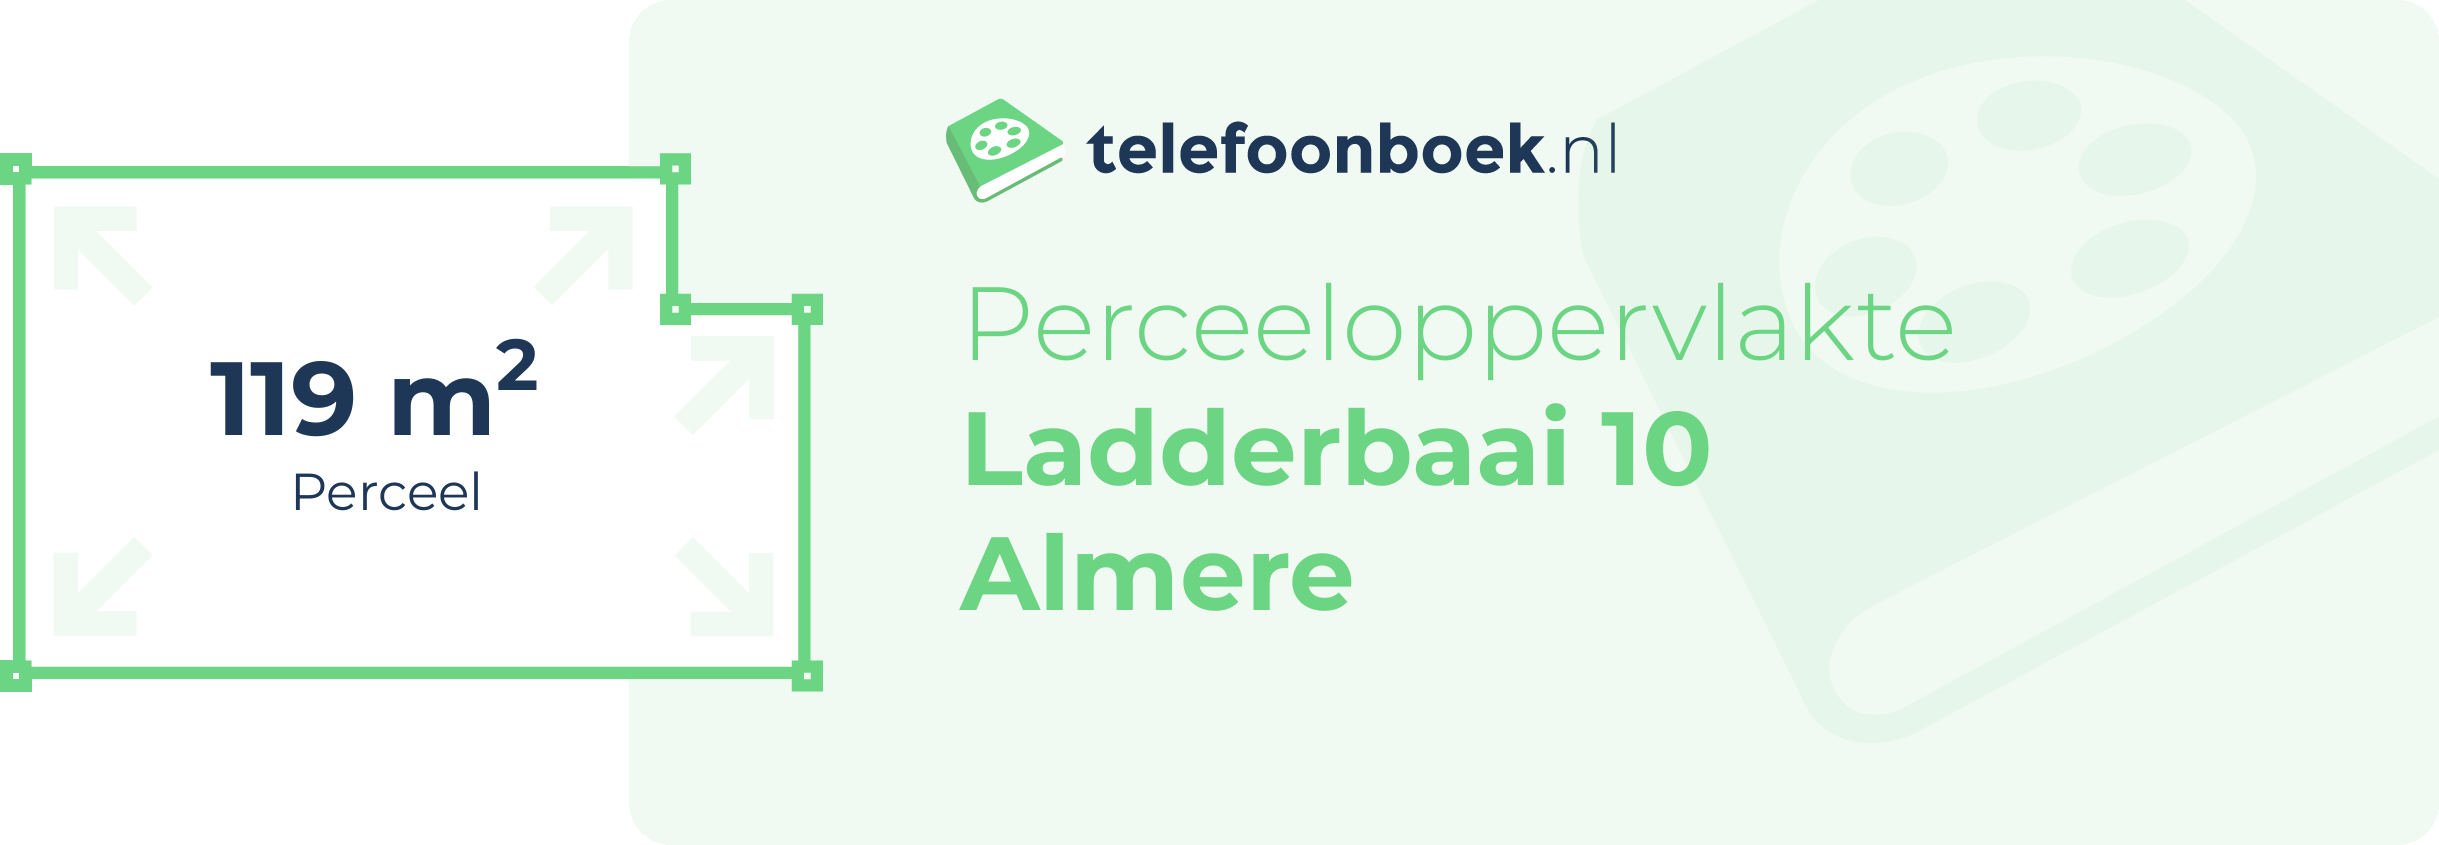 Perceeloppervlakte Ladderbaai 10 Almere